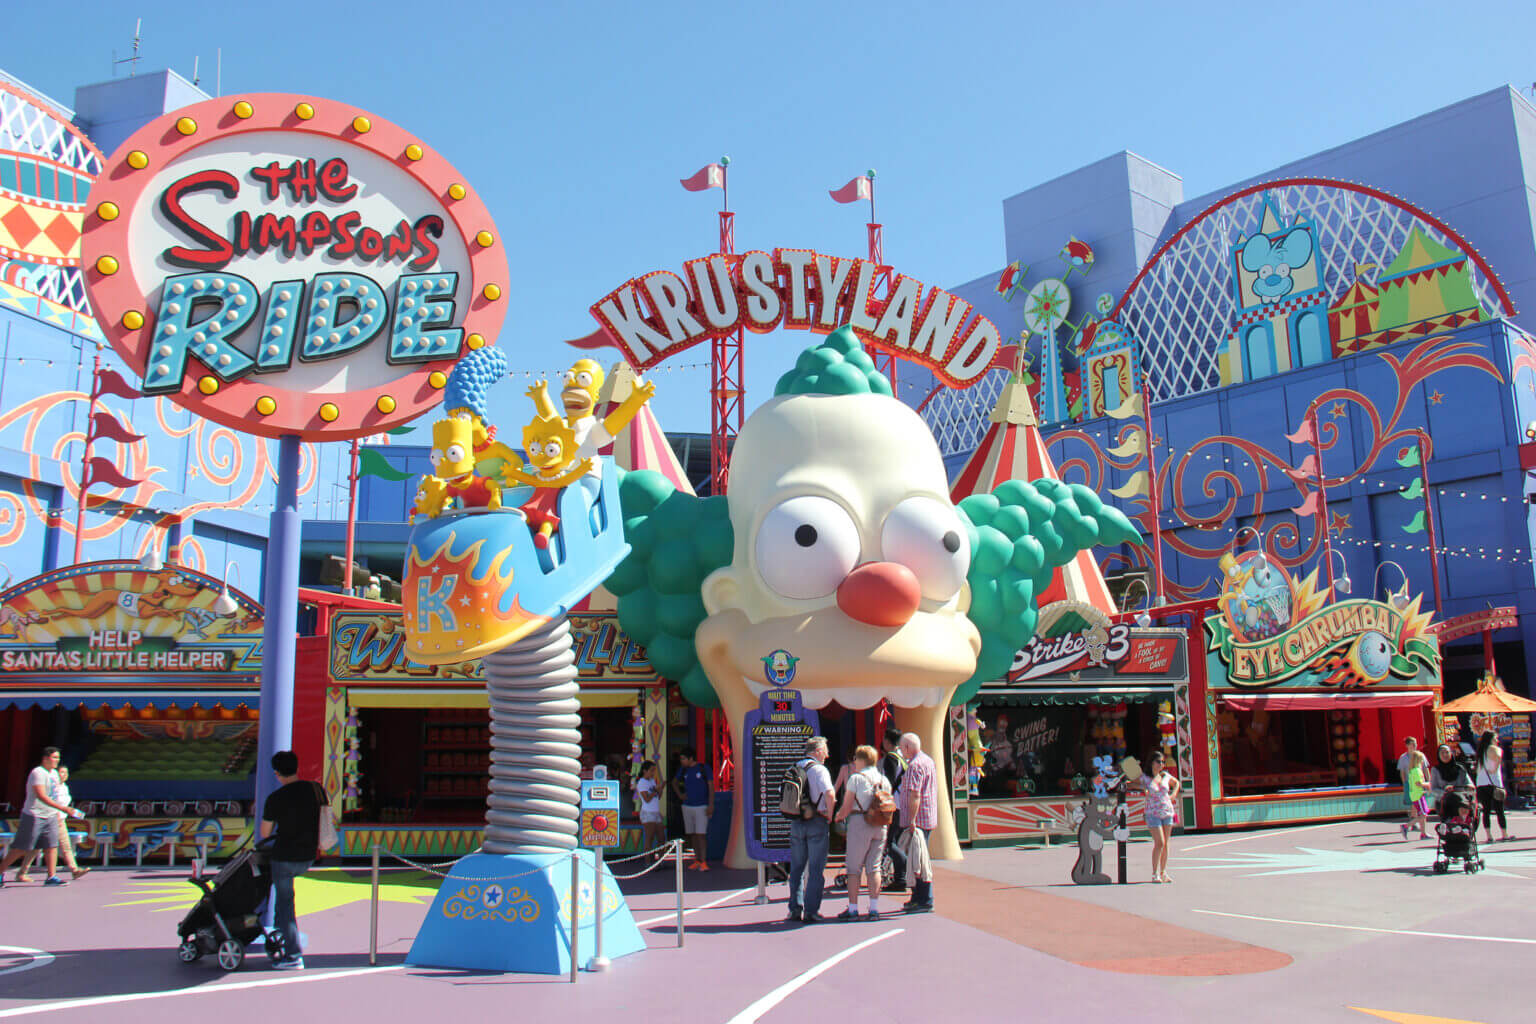 Universal Studios Orlando Rides List - All Universal Studios Rides with